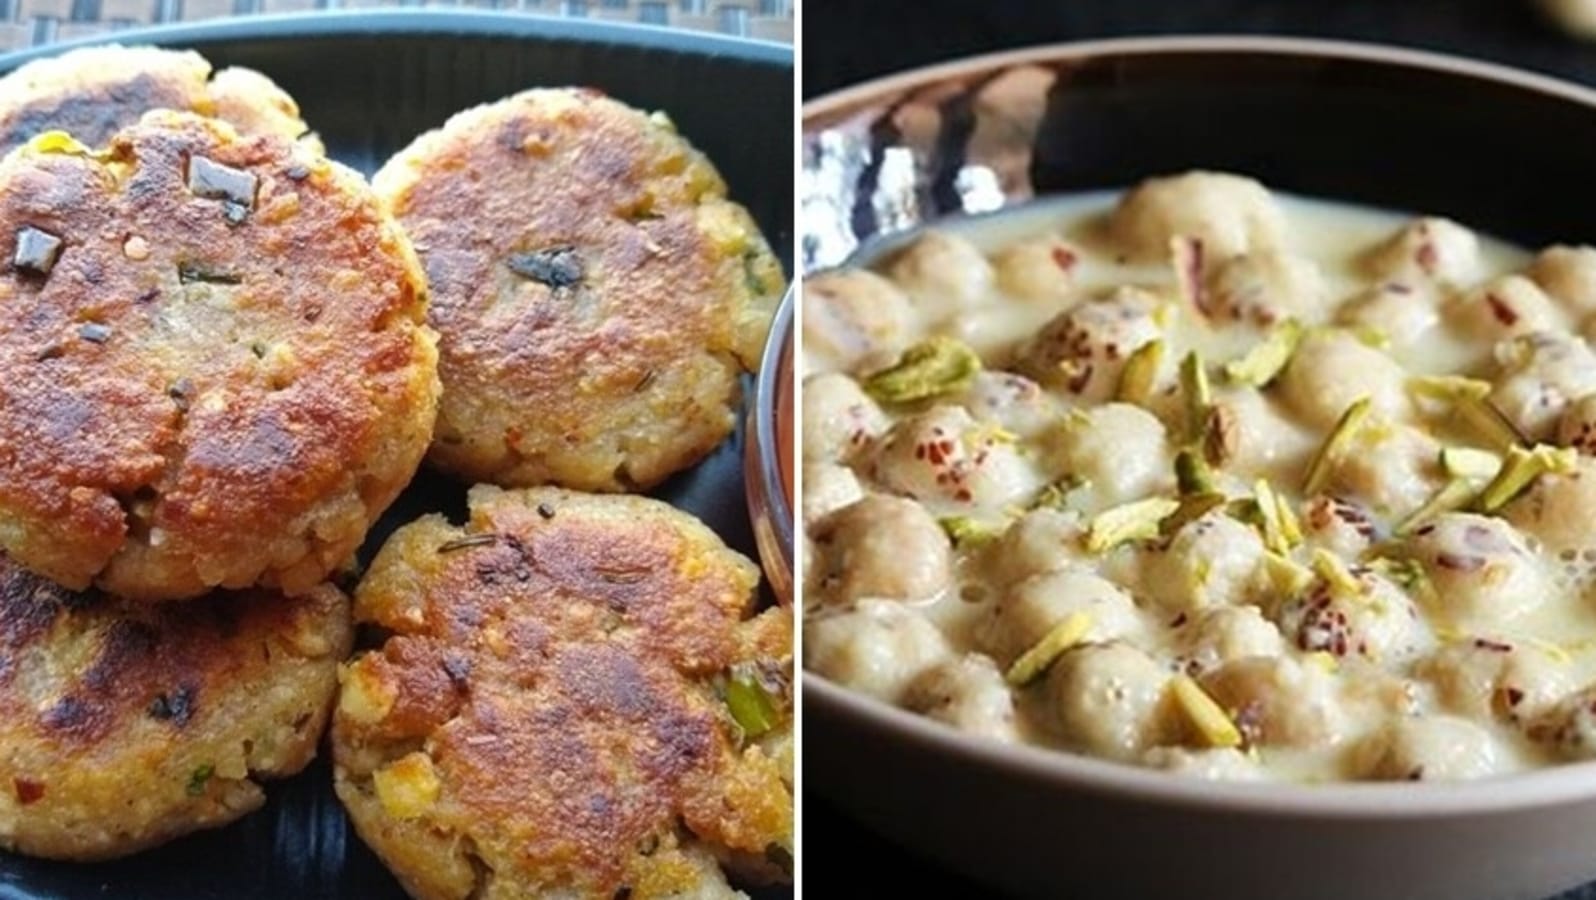 Navratri fasting recipes to try during festive season | Food – Gulf News